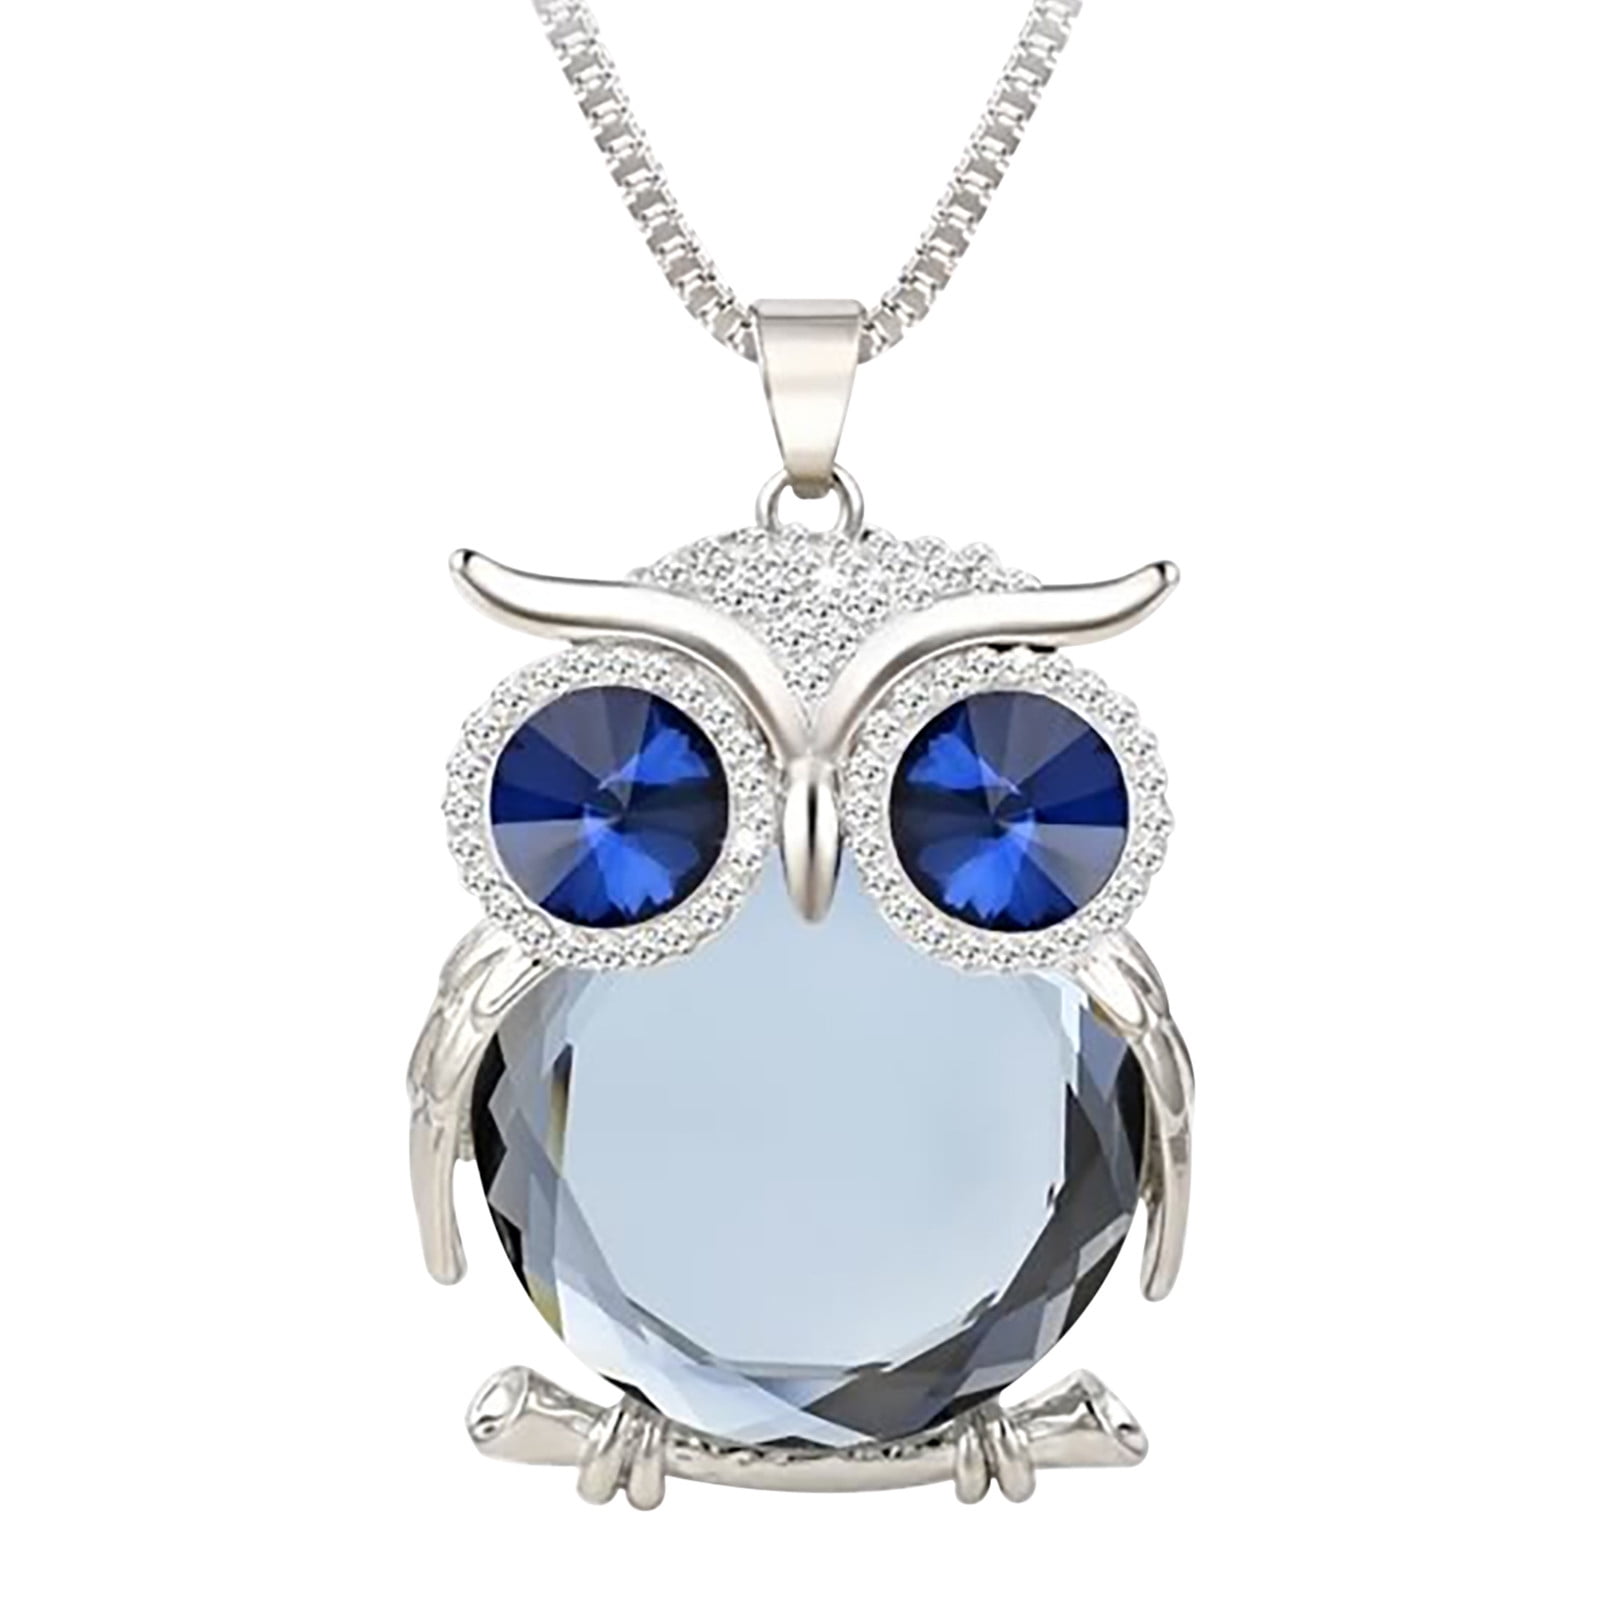 Magic Metal Owl Locket Necklace Vintage Retro Gold Tone Antique Crystal Animal Charm NF10 Fashion Jewelry